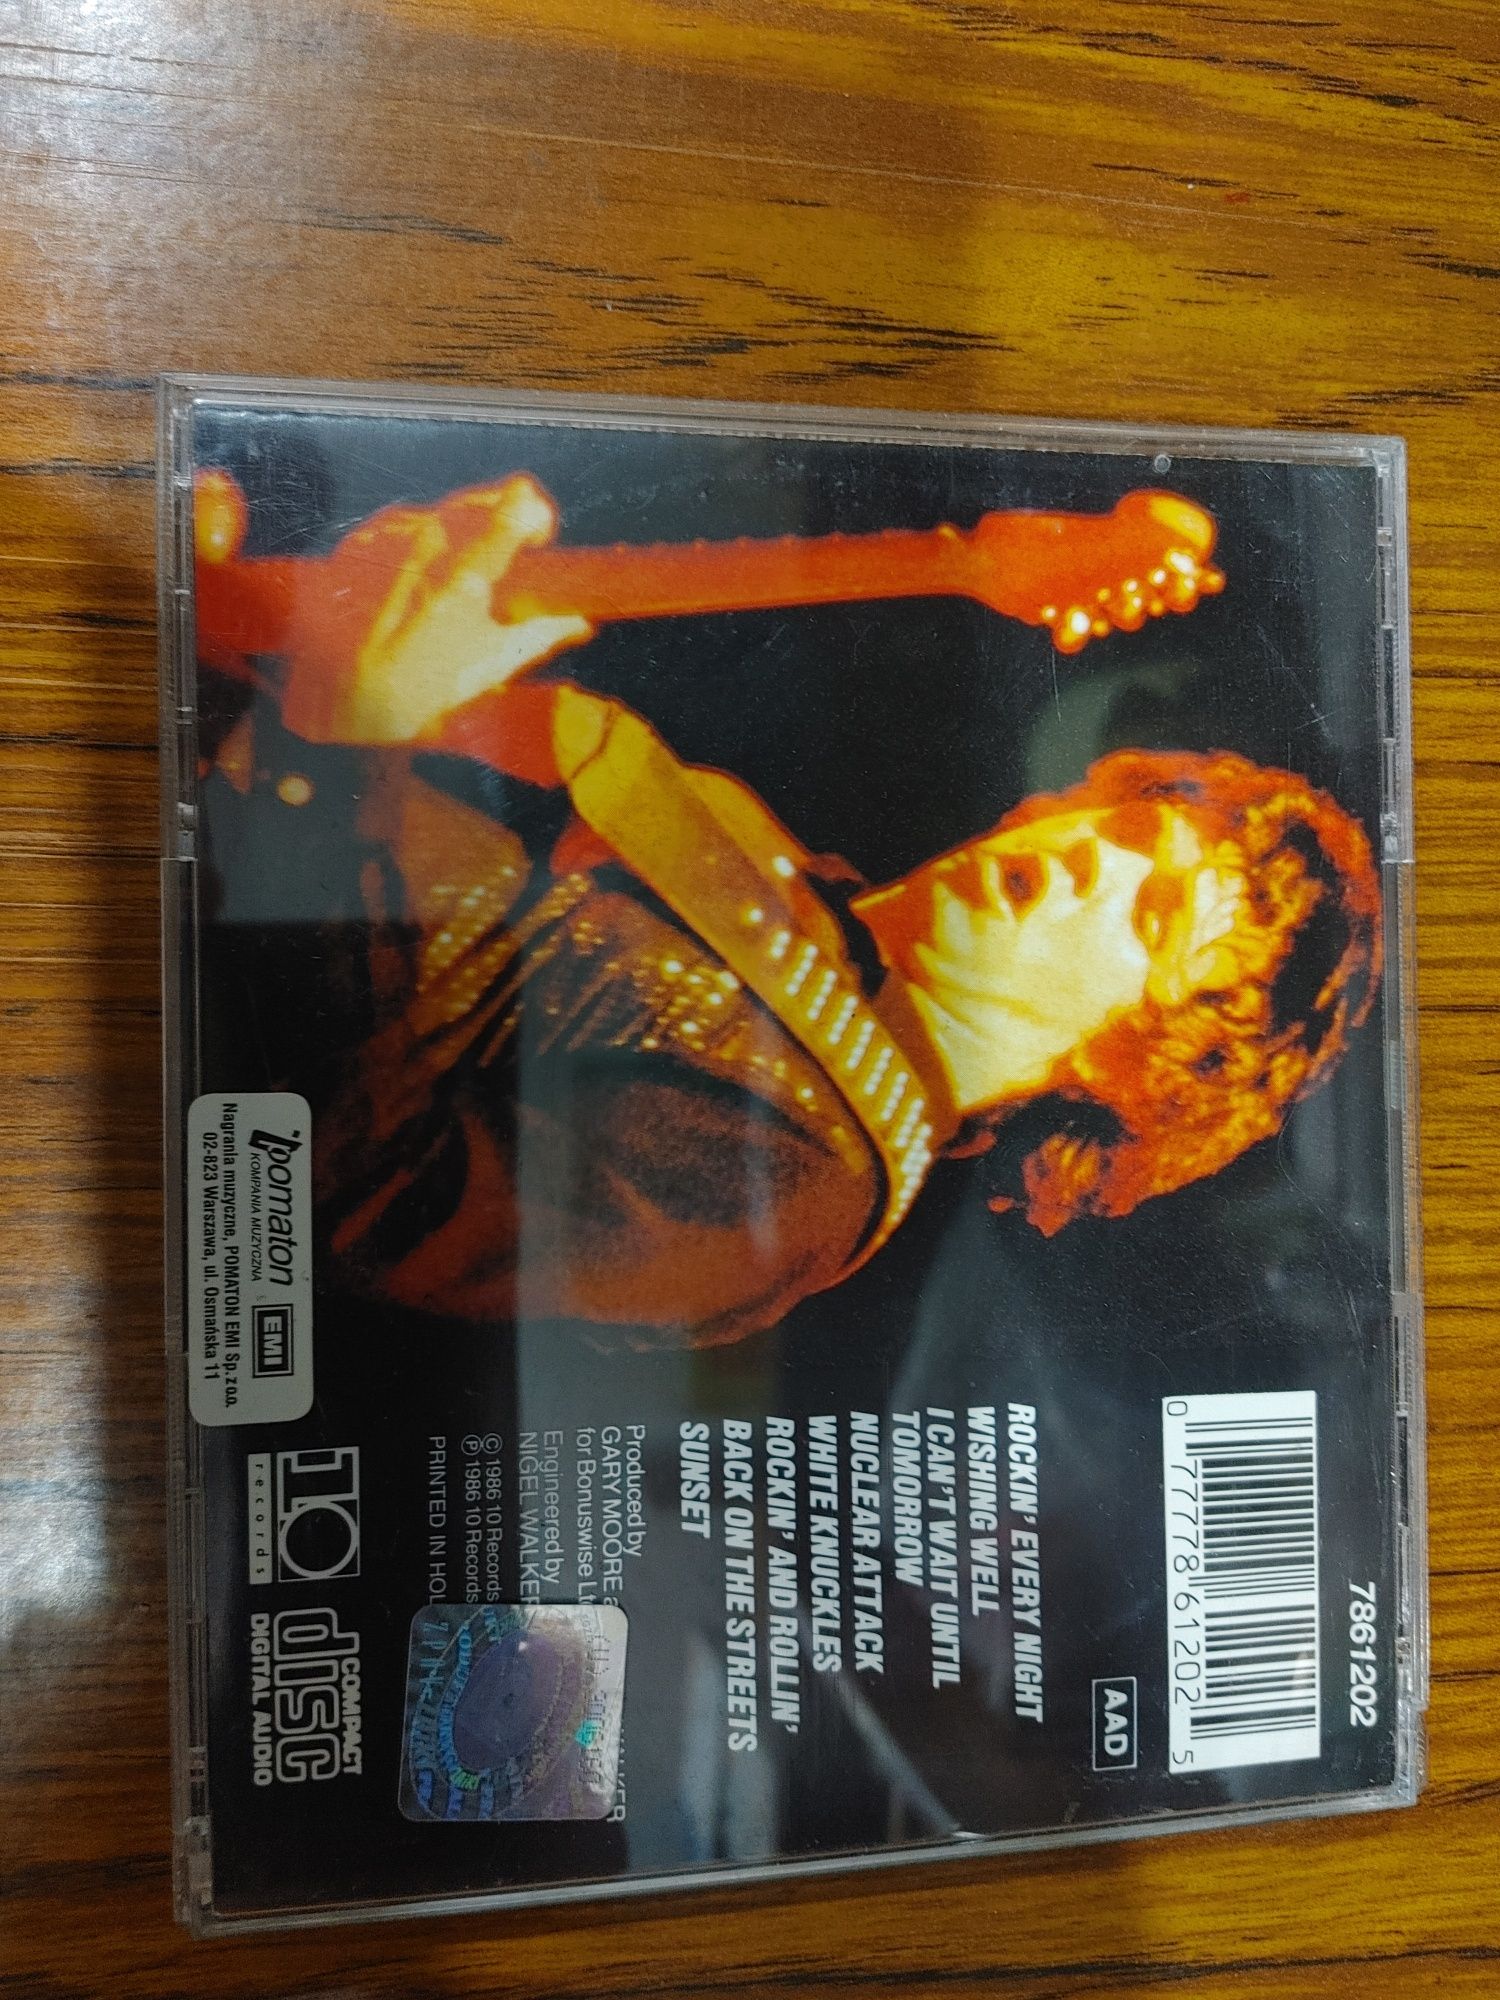 CD Rockin' Every Night - Live In Japan Gary Moore